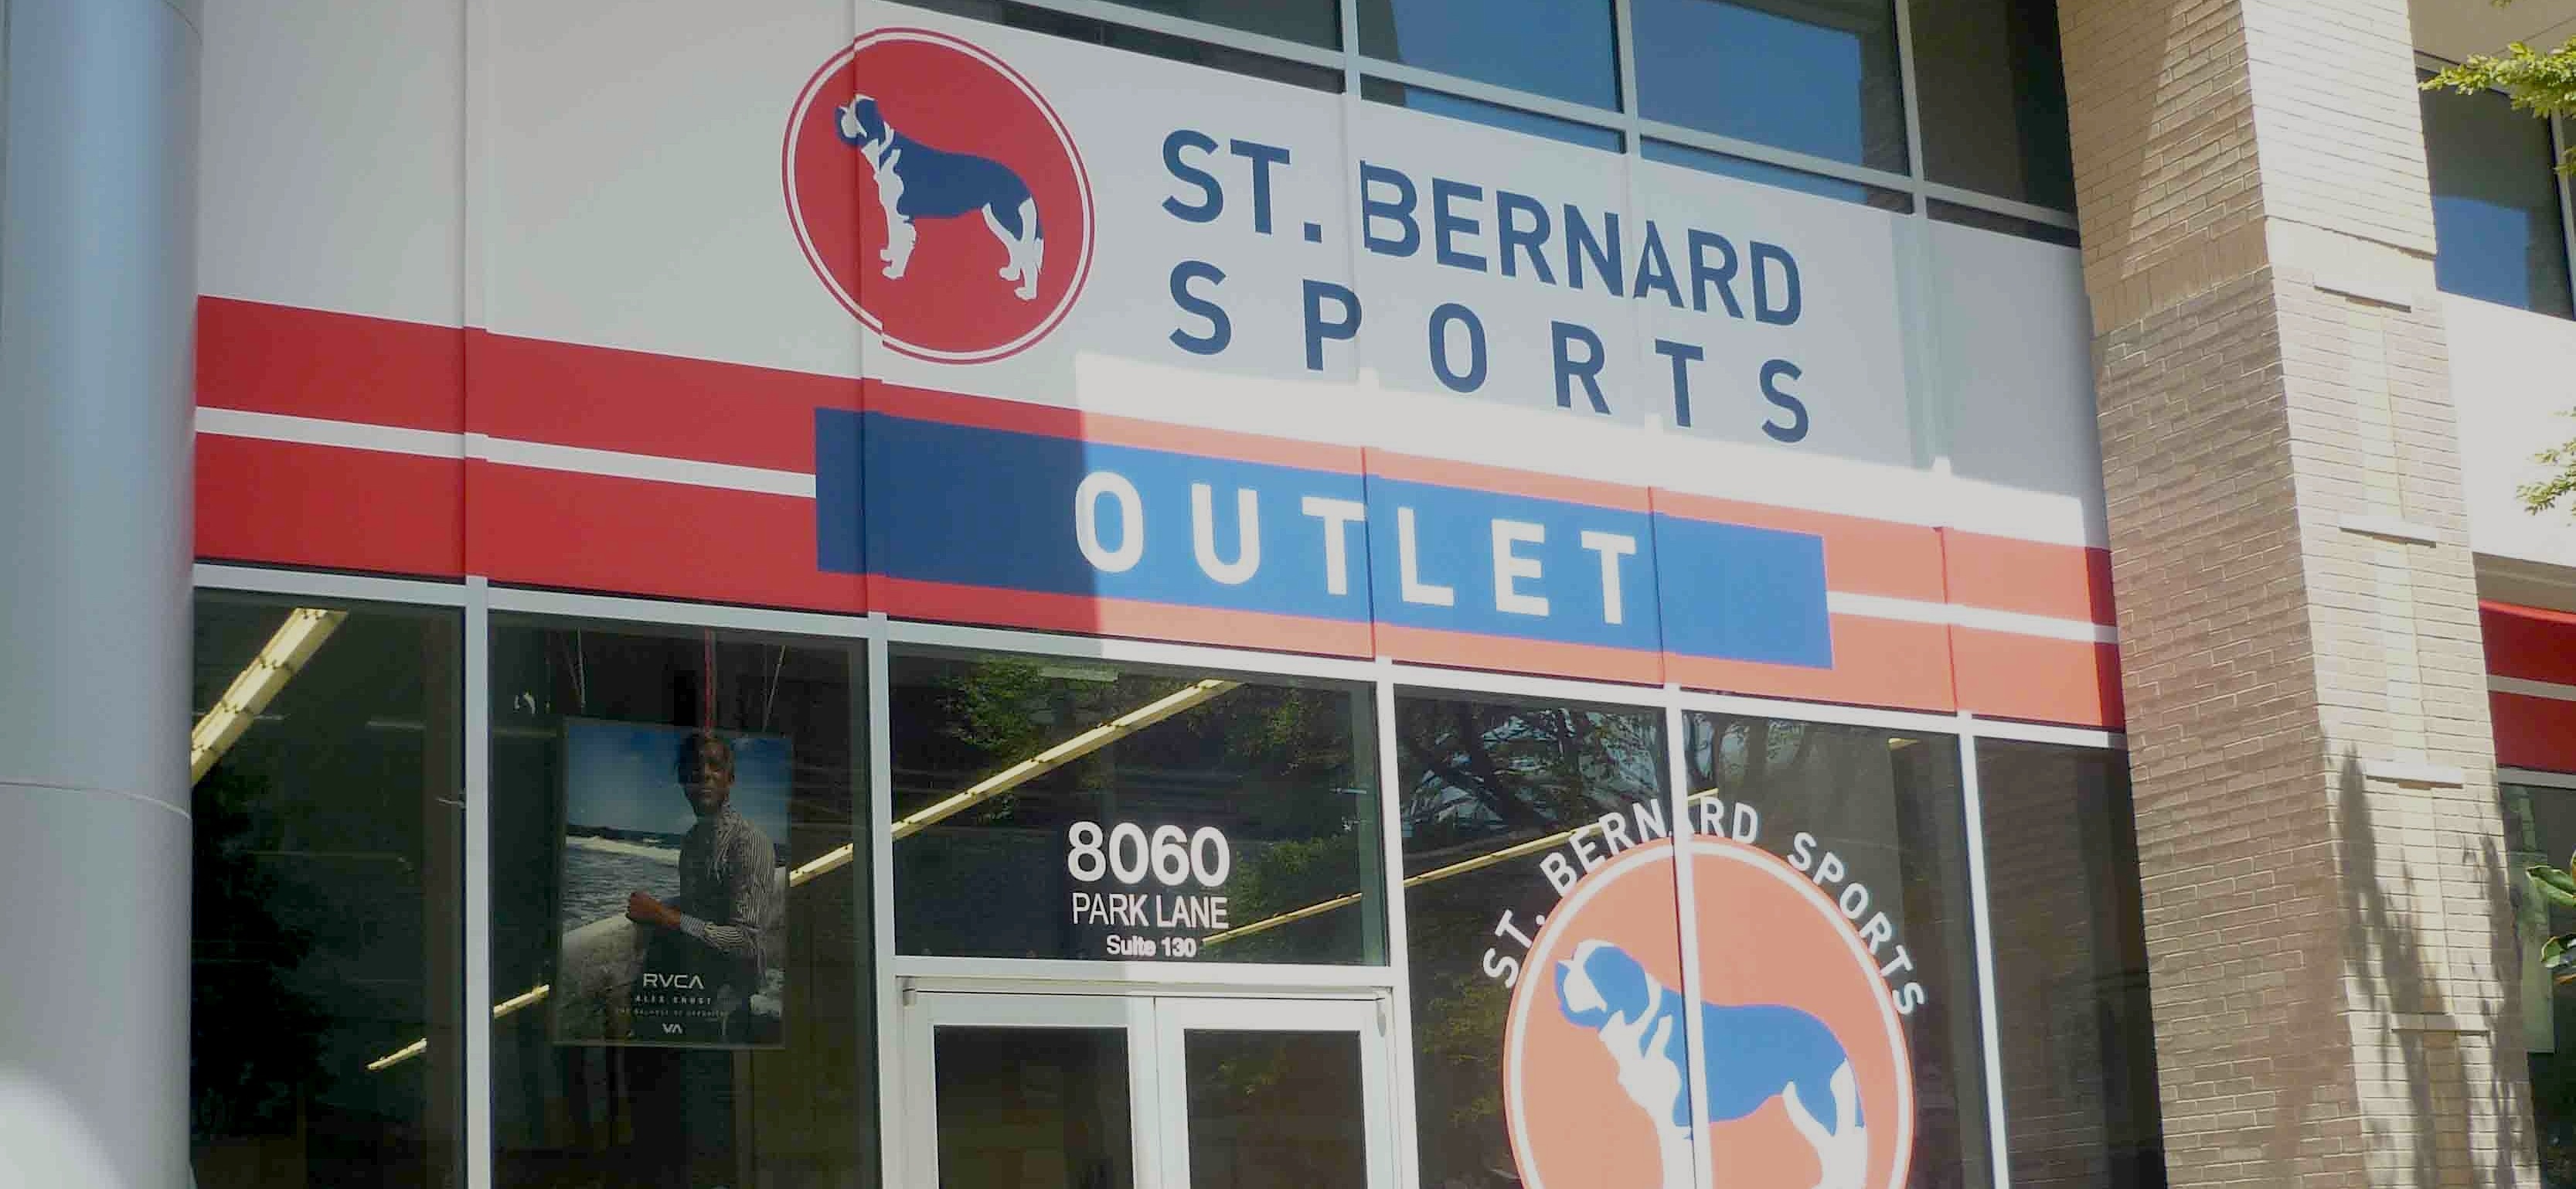 St. Bernard Sports opens outlet in Shops at Park Lane - Preston Hollow